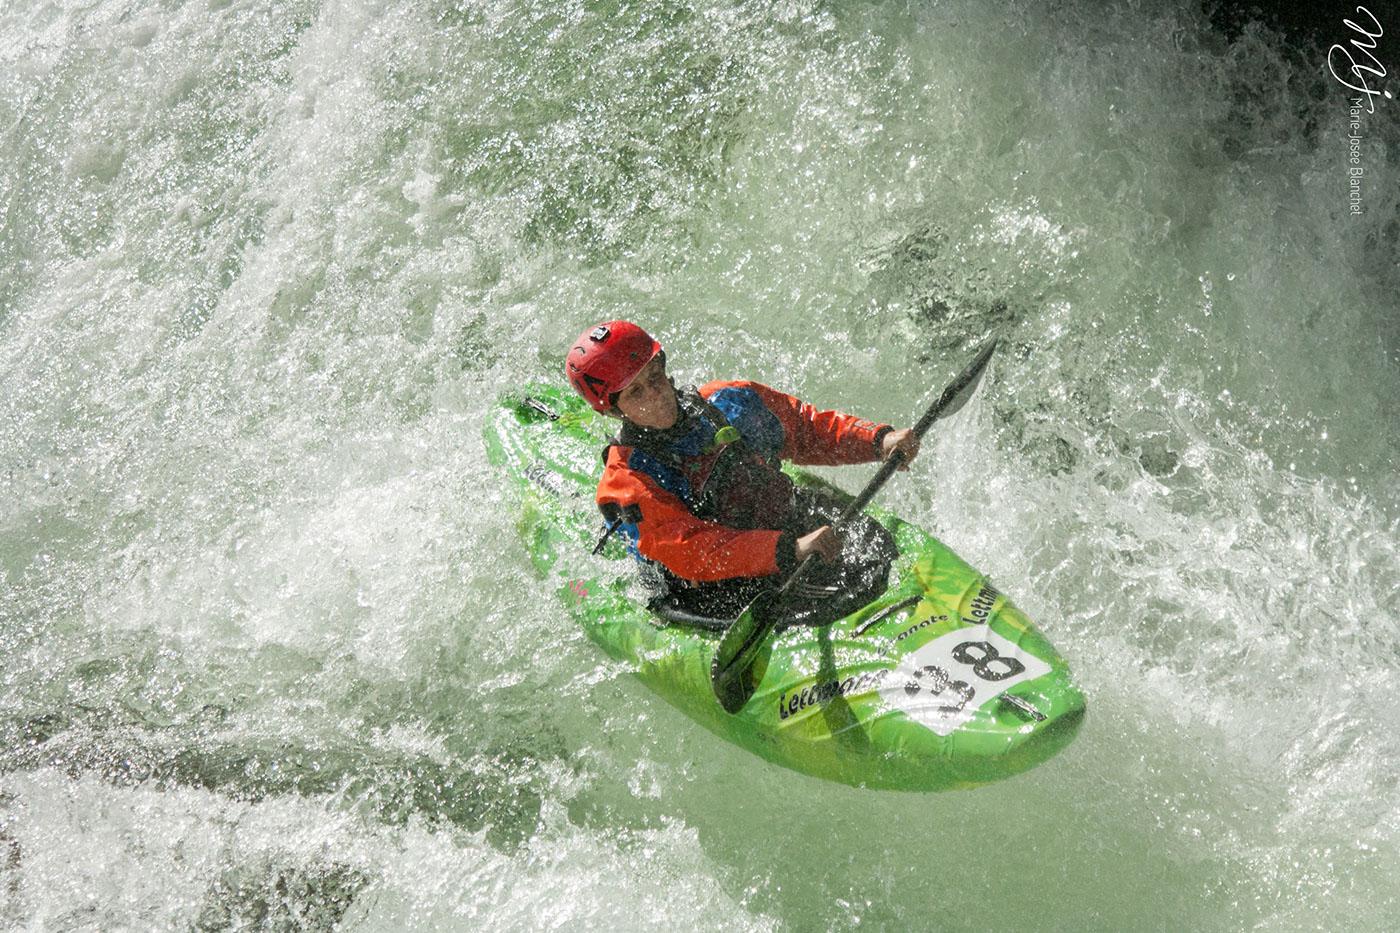 Adobe Portfolio race Canada whistler british columbia Cheakamus river kayak rafting water waterfall boat athlete flow